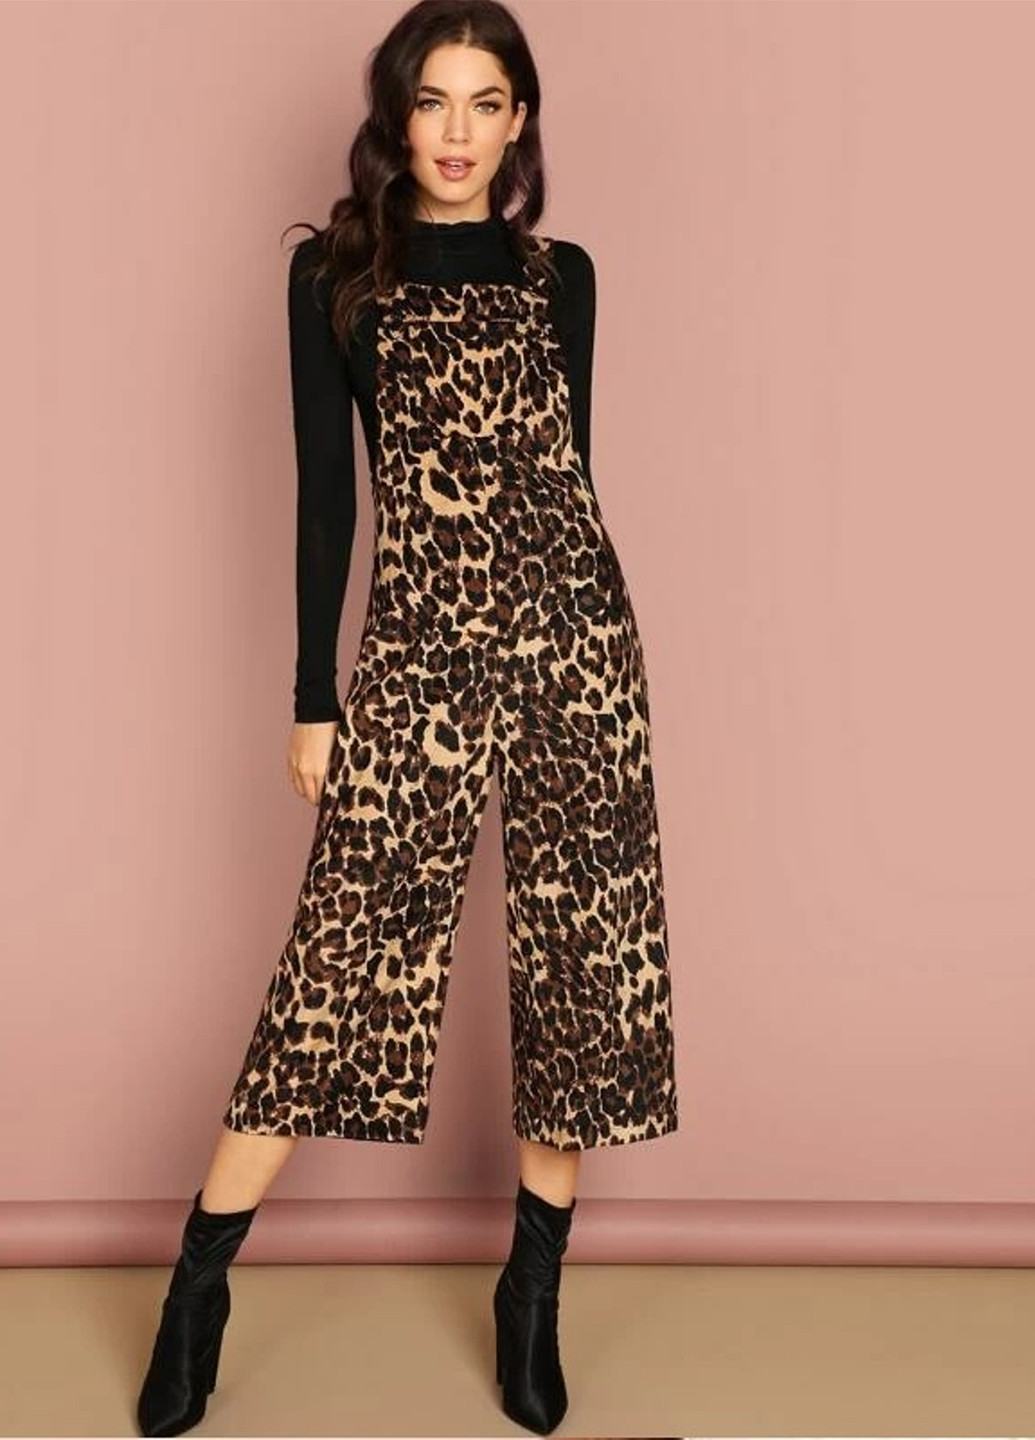 Комбинезон SHEIN комбинезон-брюки леопардовый коричневый кэжуал полиэстер